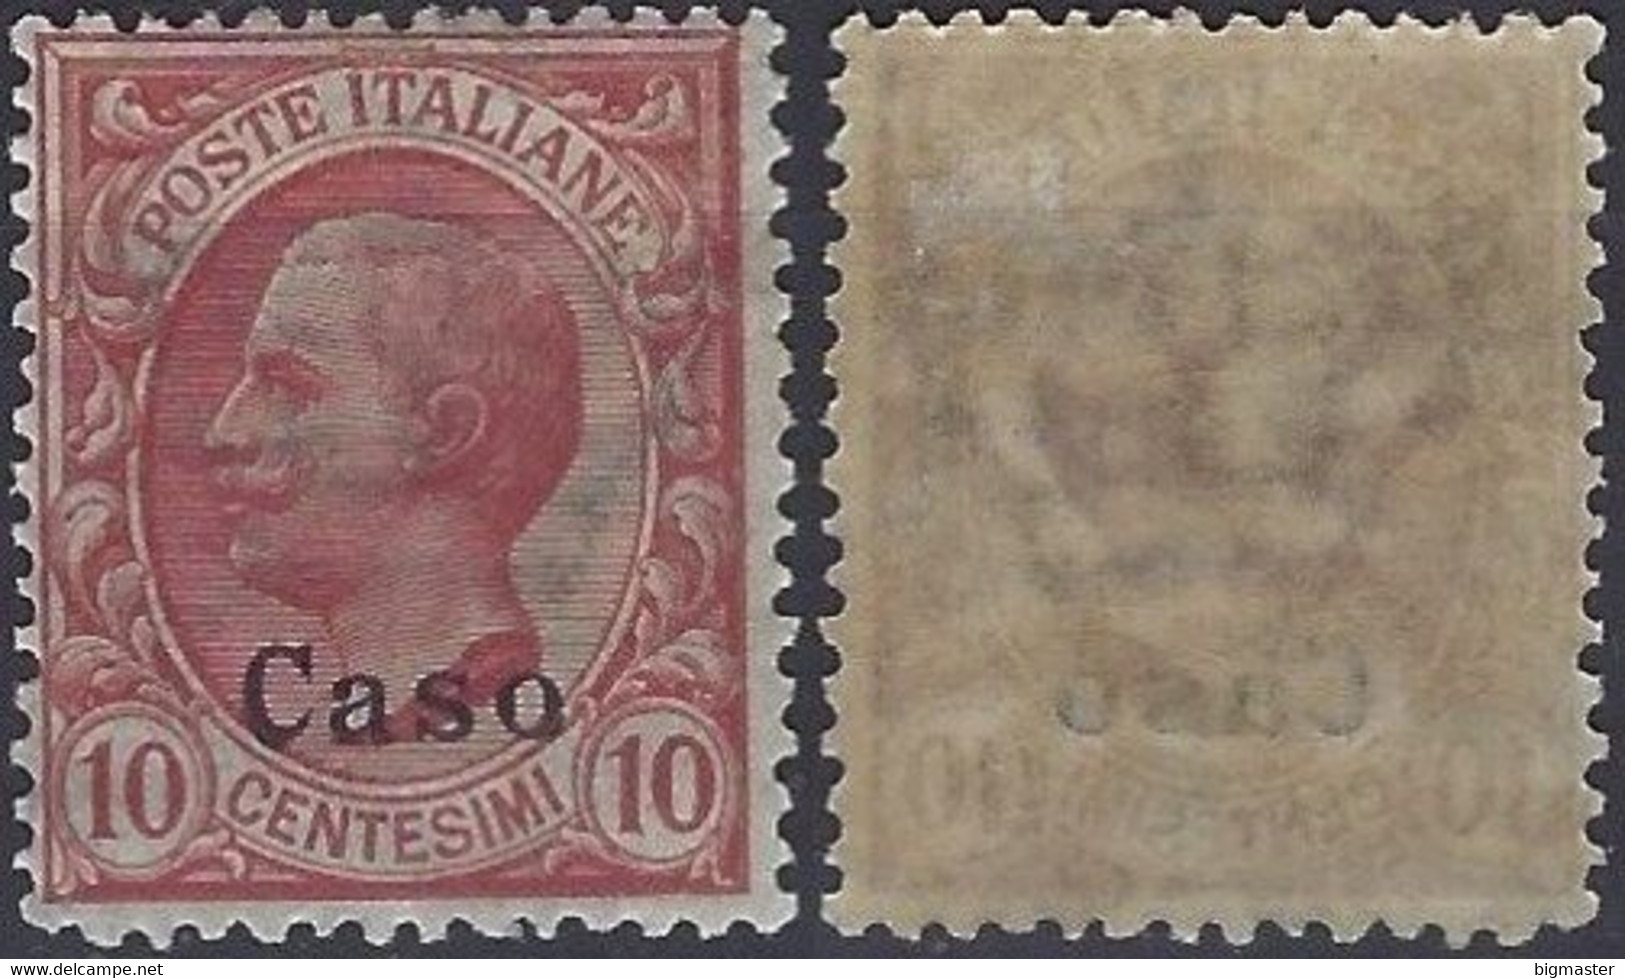 1912 Regno D'Italia IG 1912 IT-EG CS3 10c  Italy Stamps Overprinted 'Caso' - Egée (Caso)